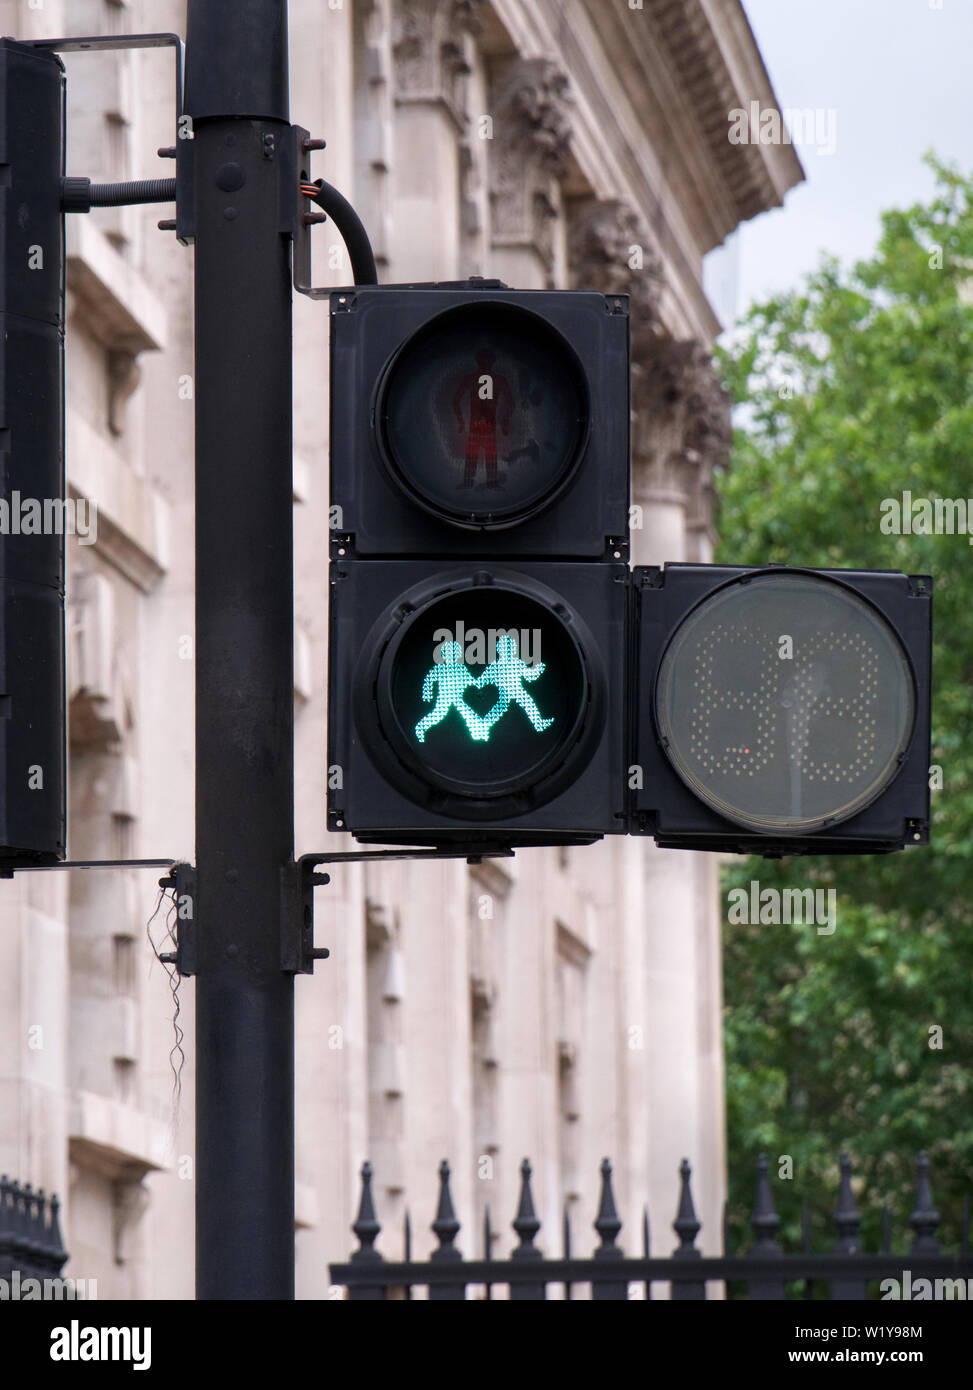 lgbt-friendly  road crossing signals in London's Trafalgar Square Stock Photo